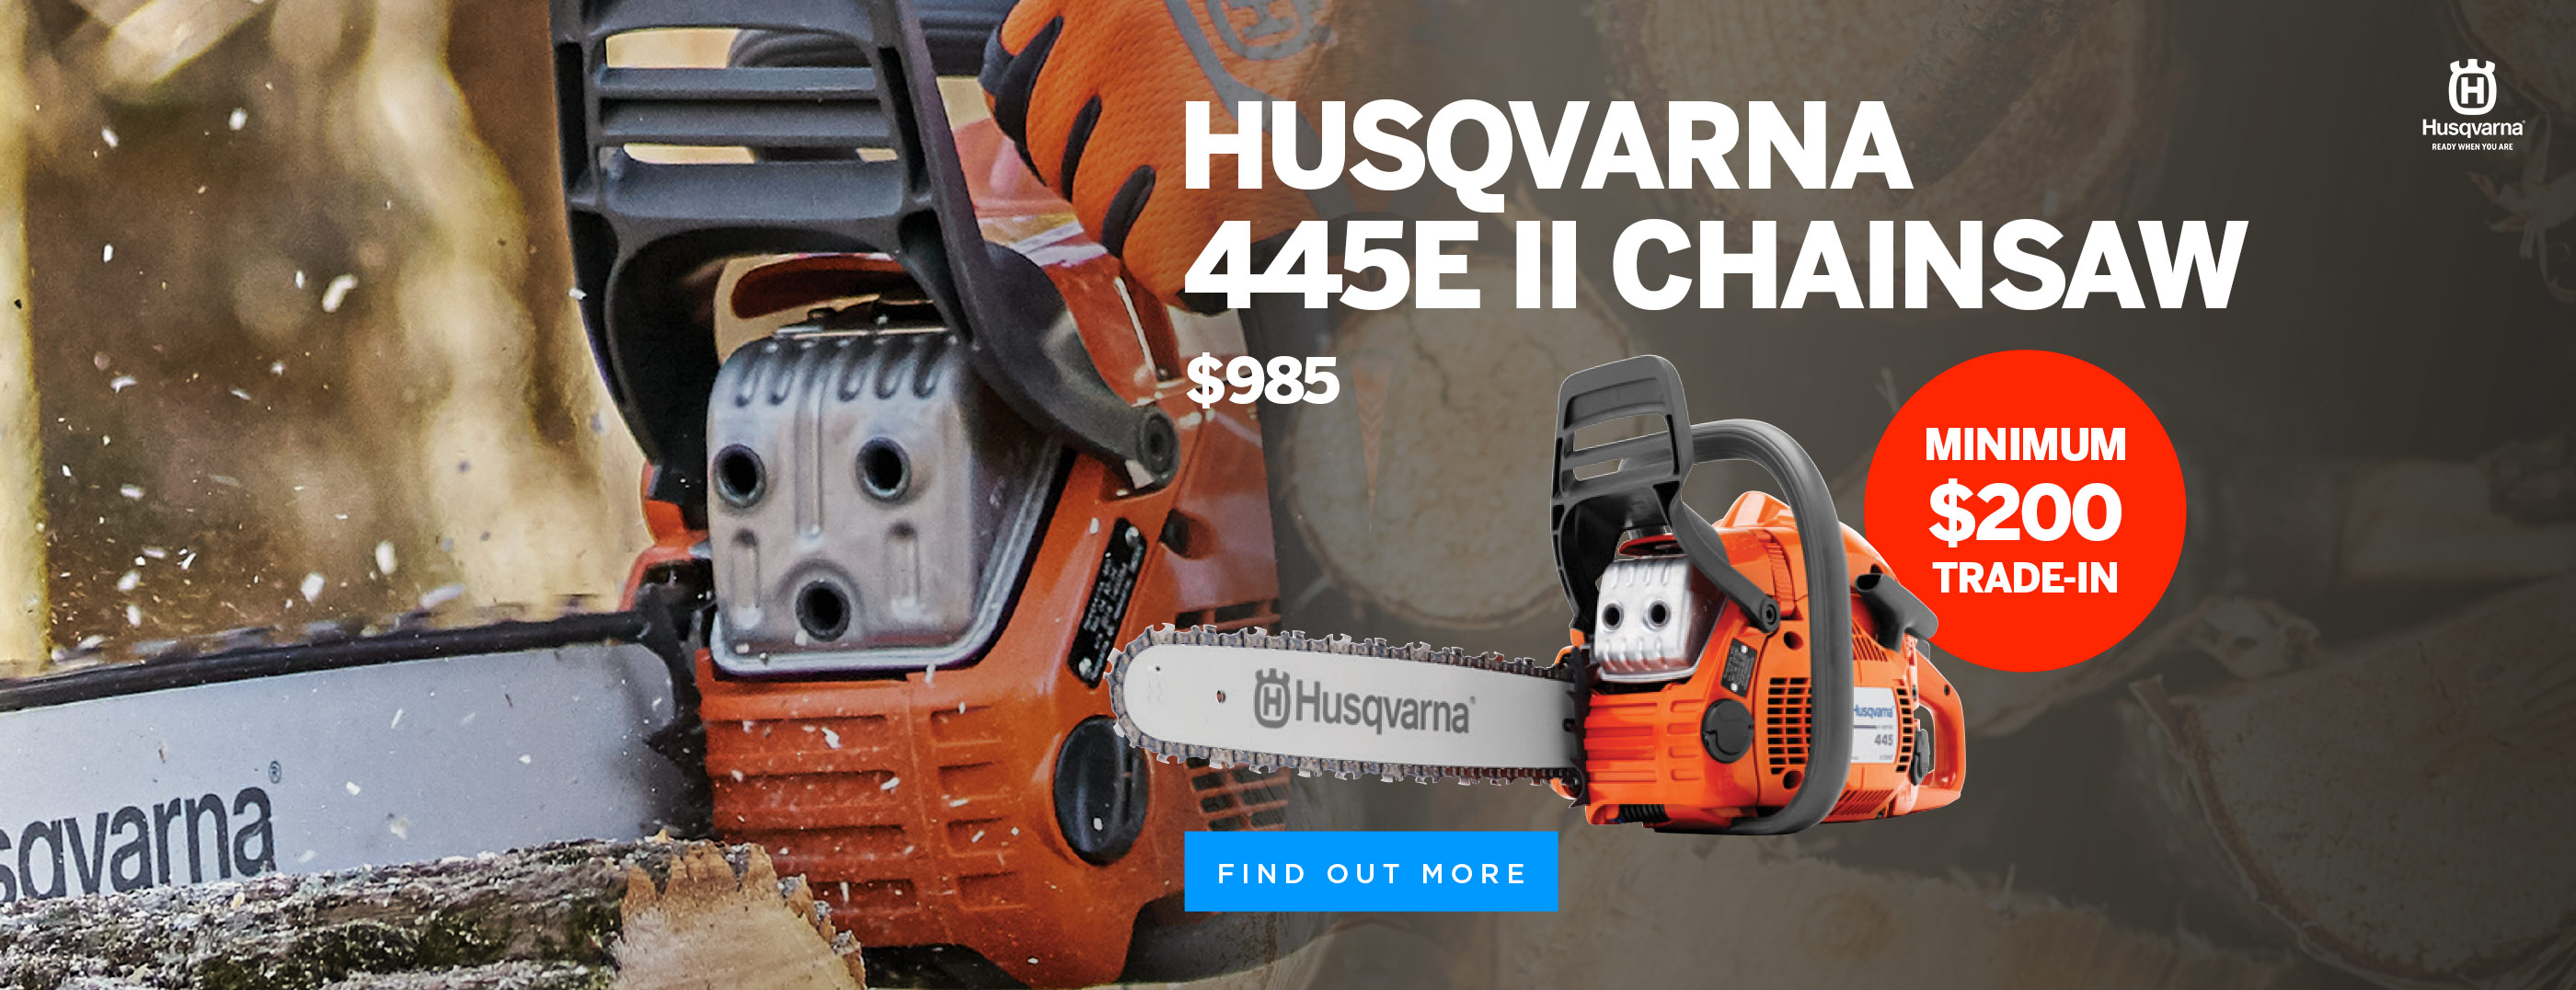 Husqvarna 445E II Chainsaw Minimum Trade in $200